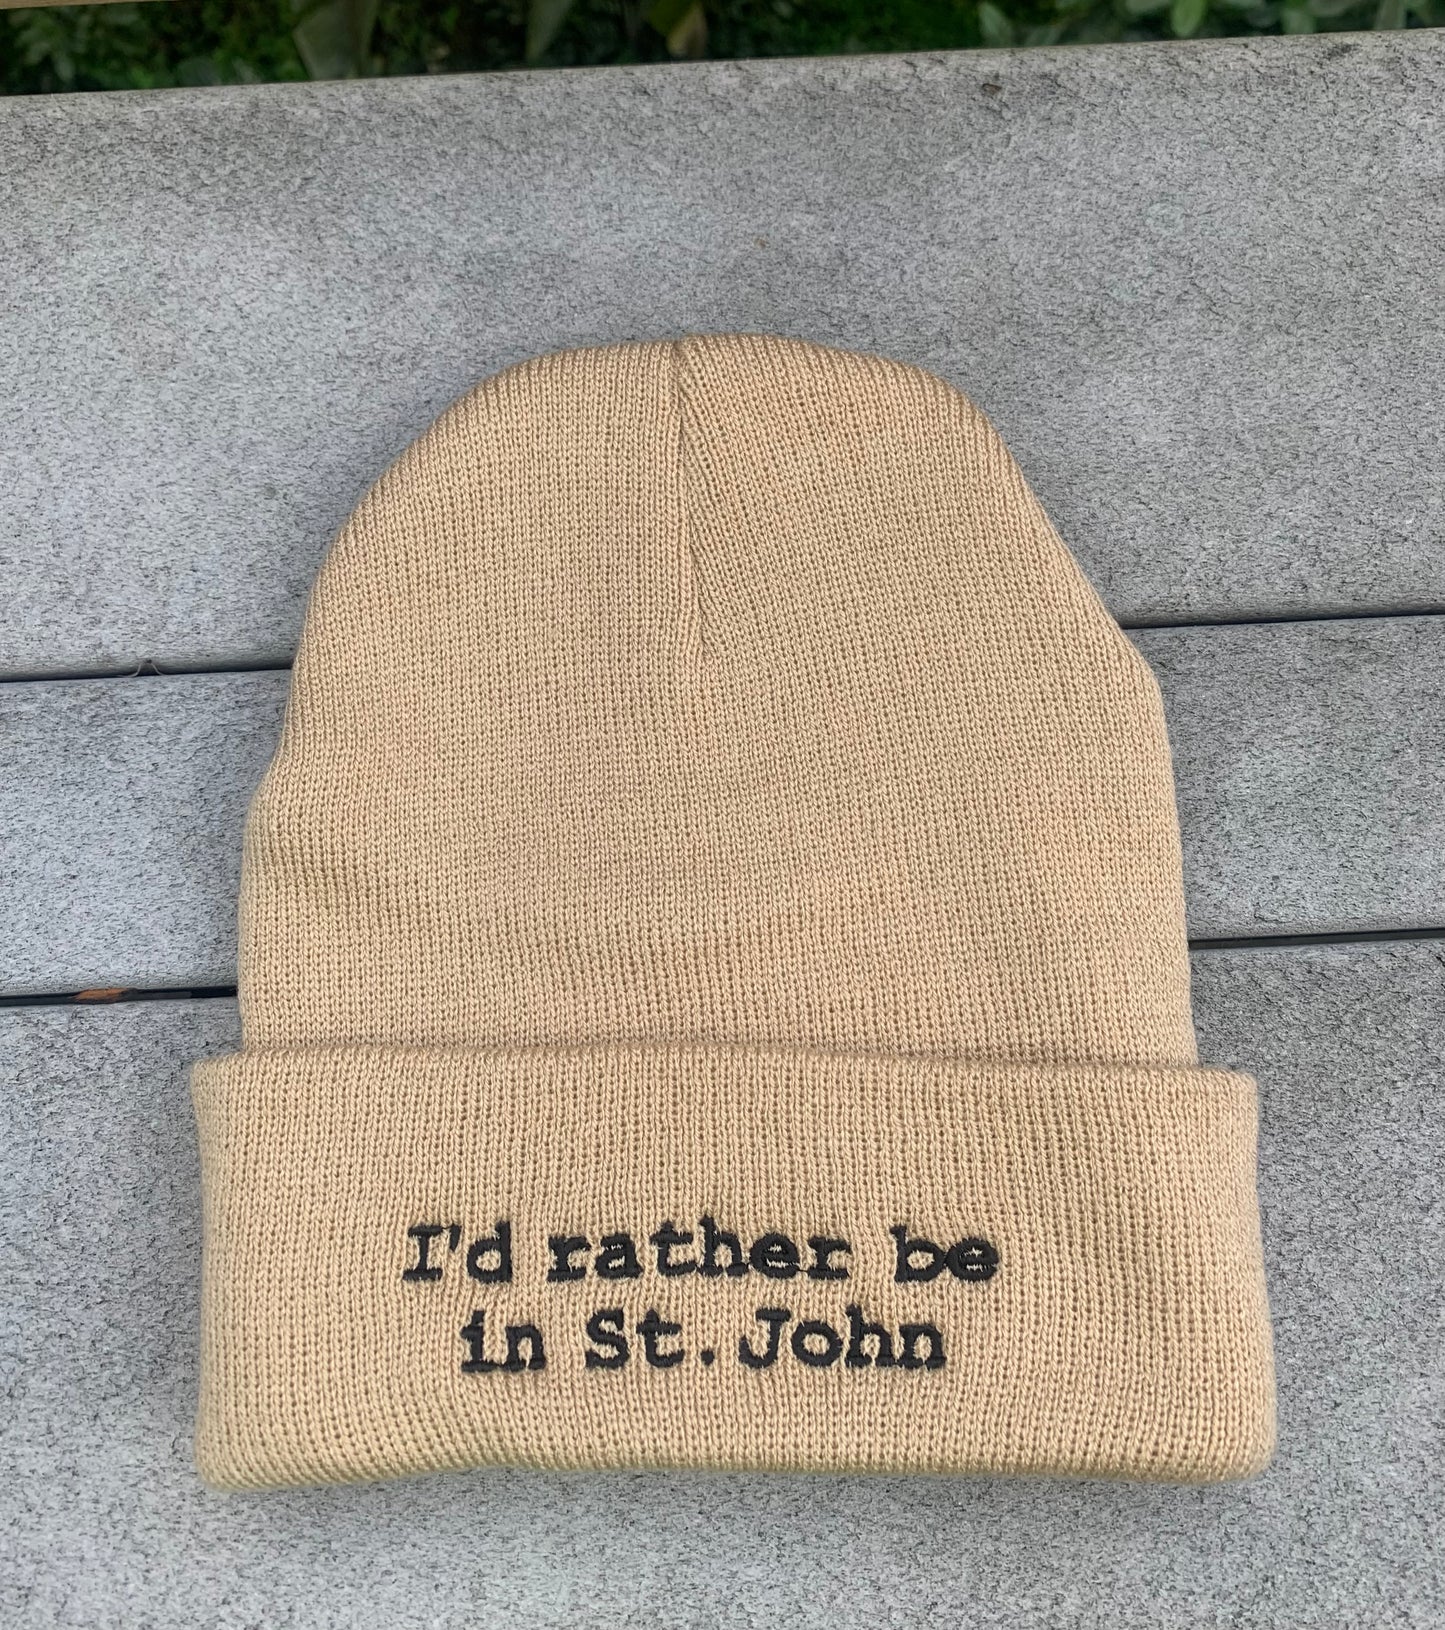 "I'd Rather Be in St. John" beanie stocking cap